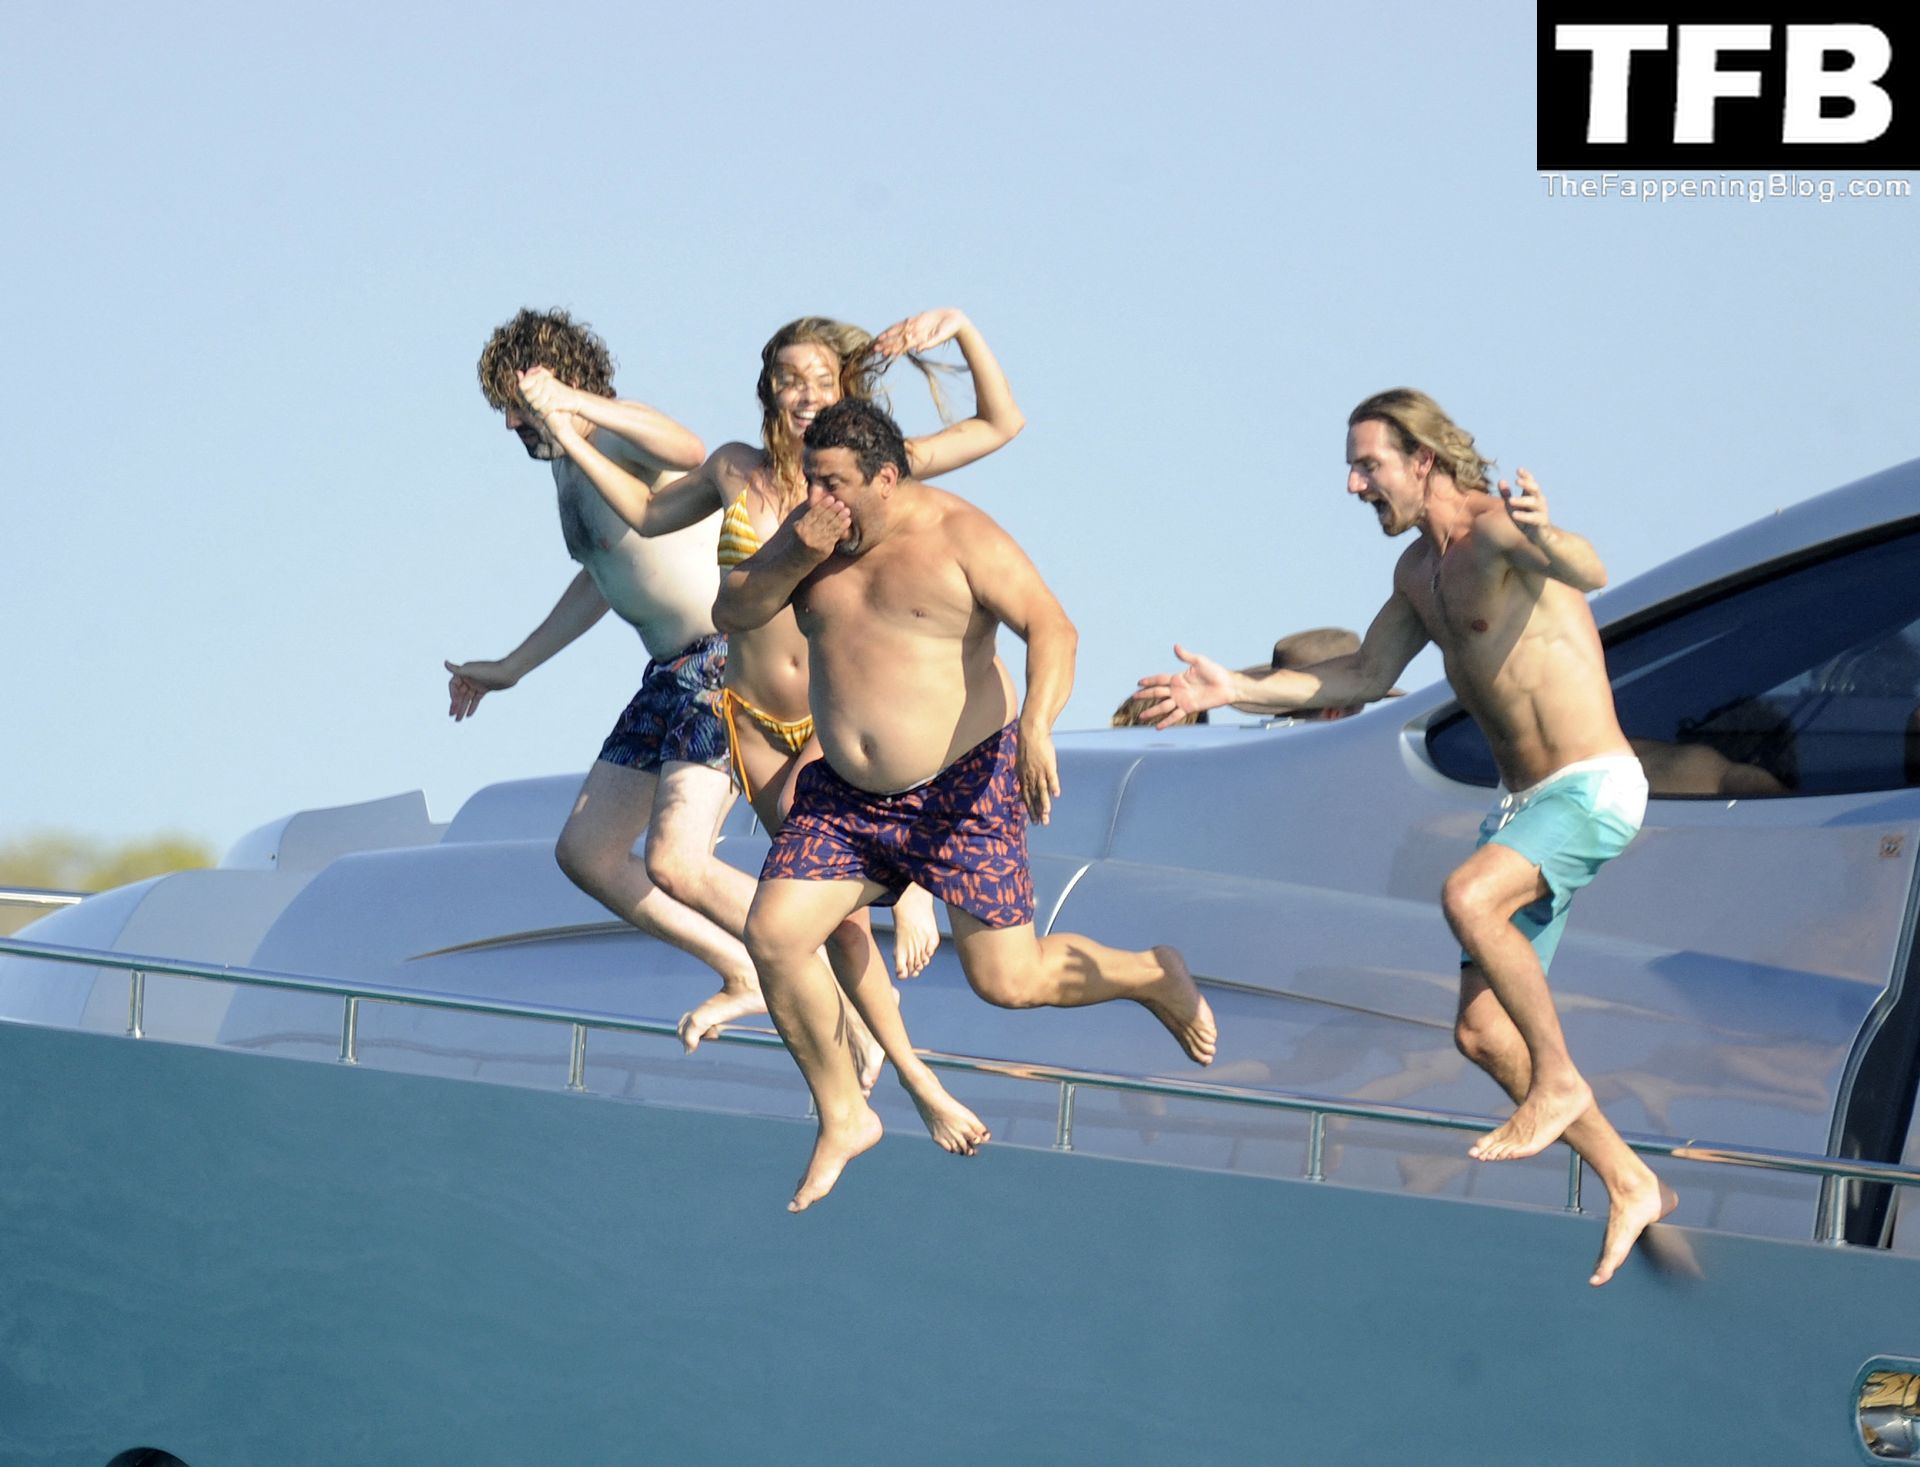 Margot Robbie Sexy The Fappening Blog 6 - Margot Robbie & Rami Malek Enjoy a Fun Boat Day in Formentera (43 Photos)